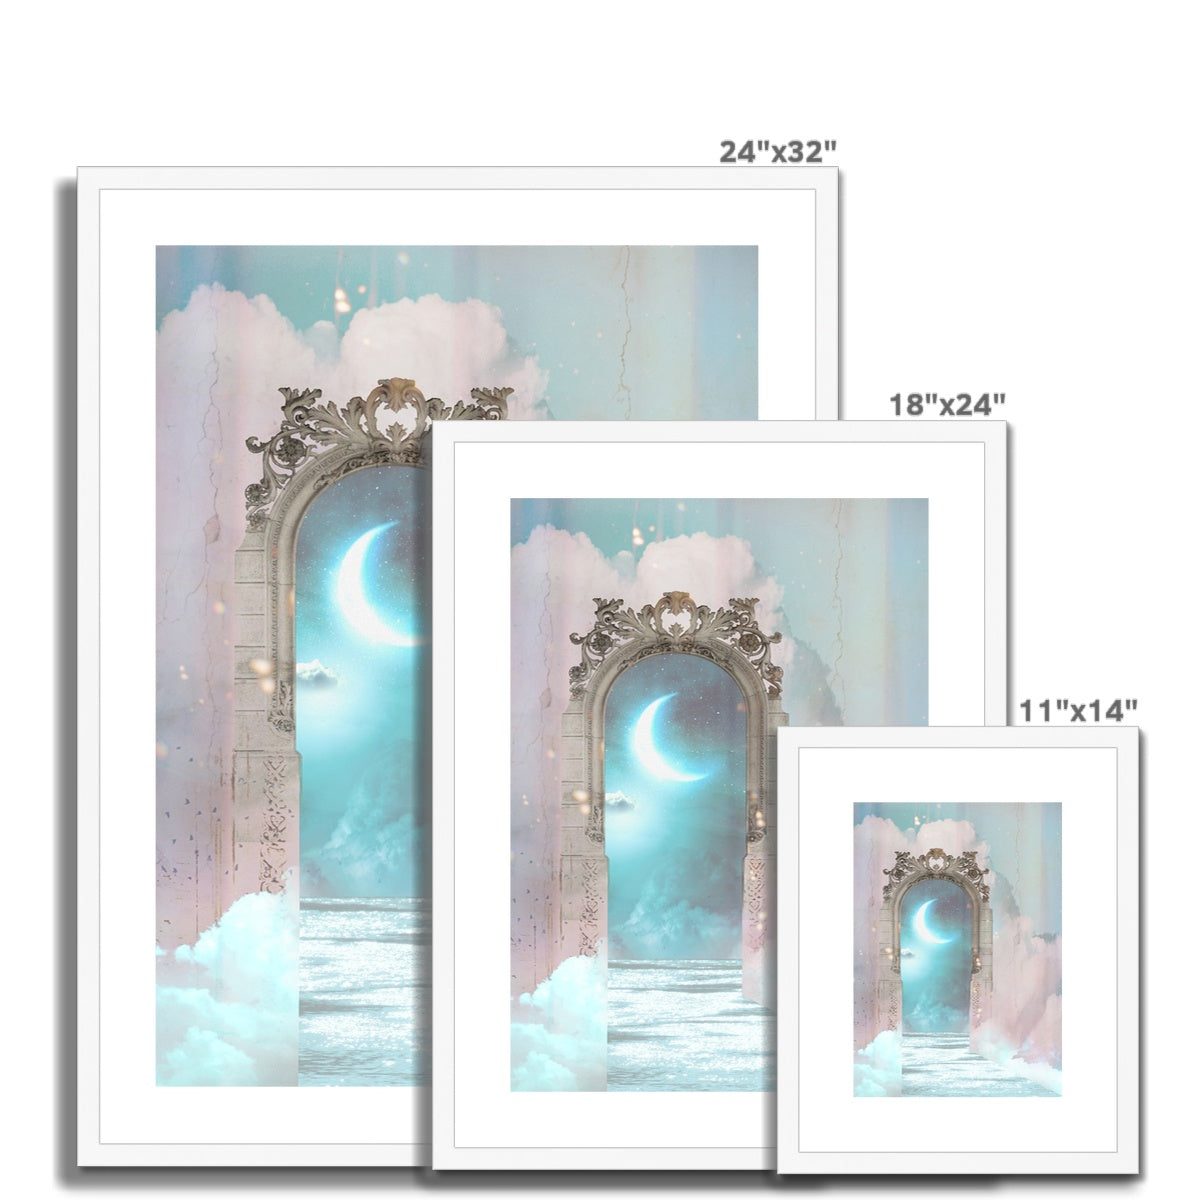 Luna  Framed & Mounted Print - Starseed Designs Inc.